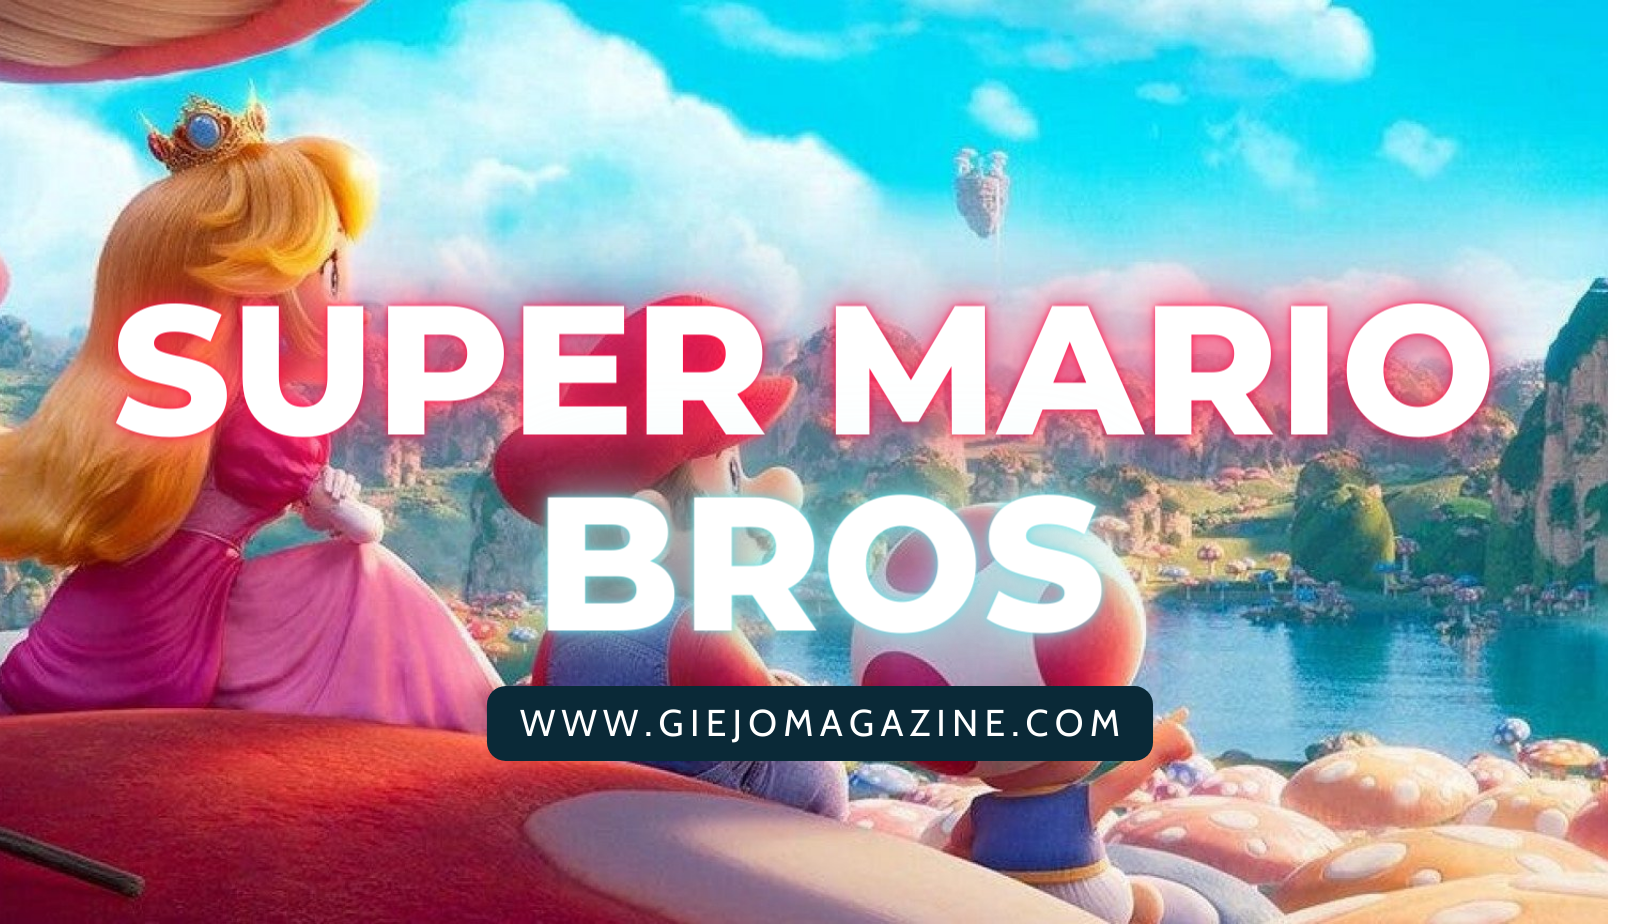 The Super Mario Bros. Movie Showtimes in 2023 